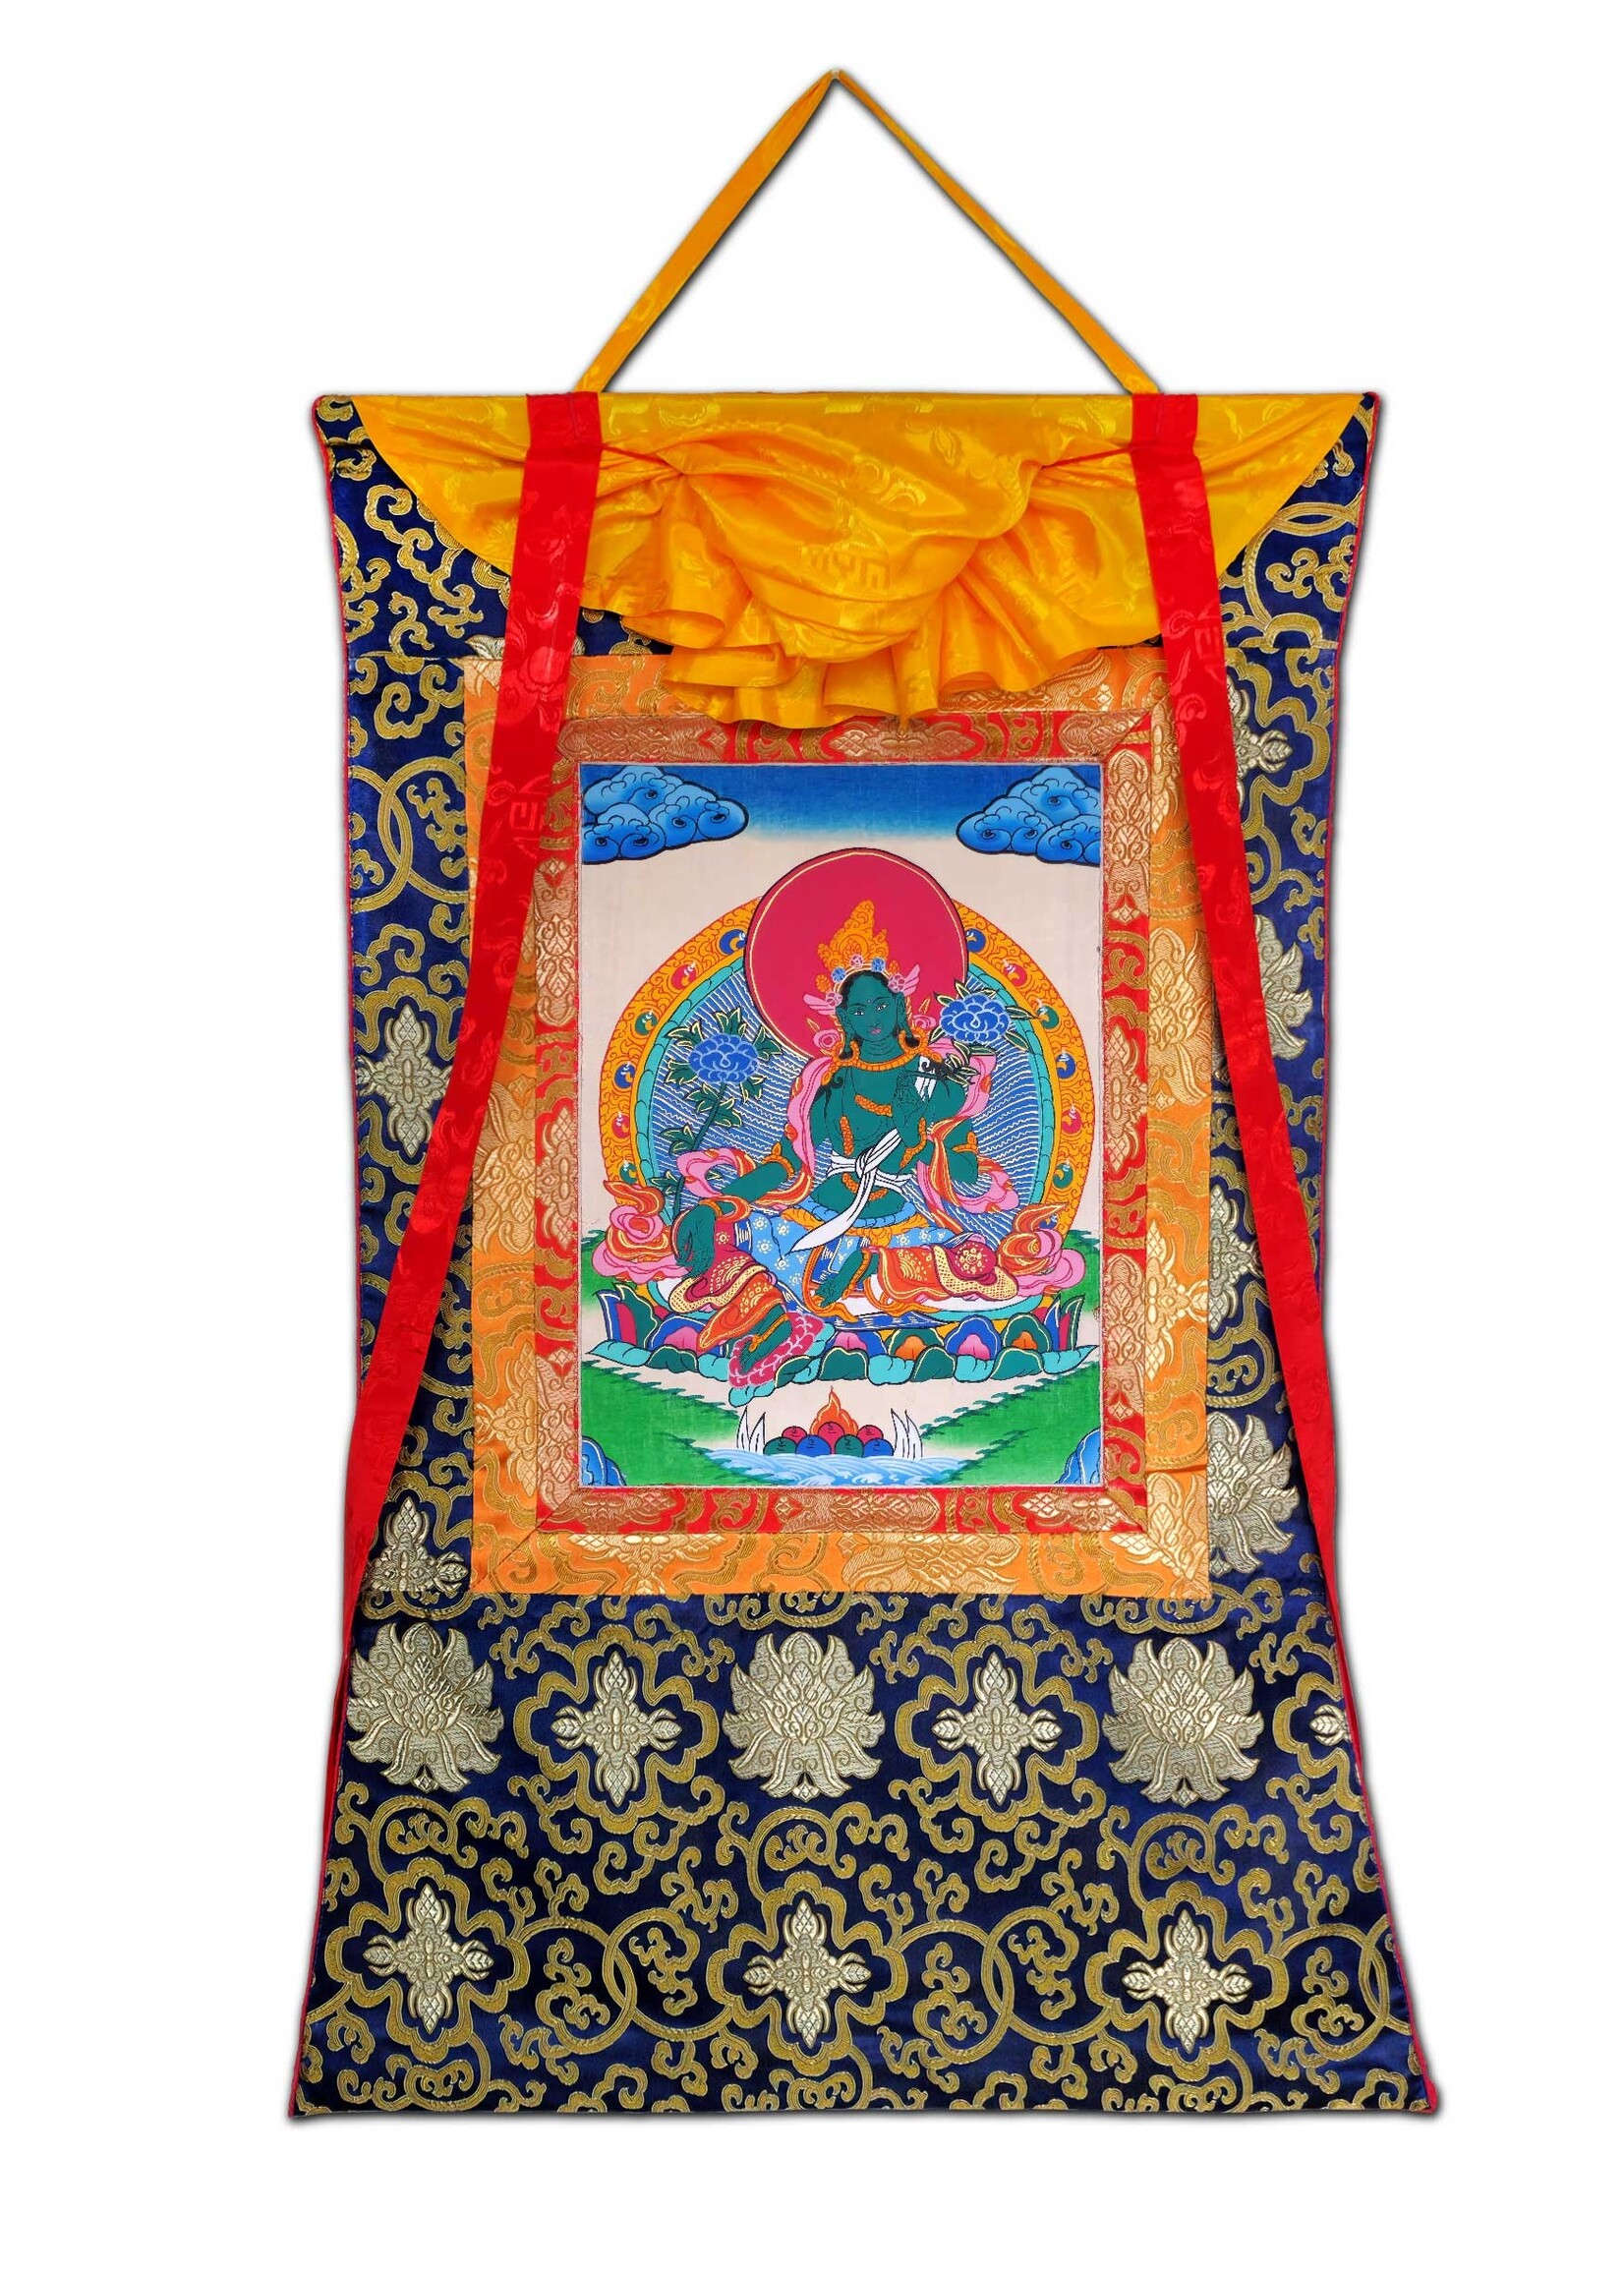 Thangka tibétaine Tara verte 80 x 55 cm